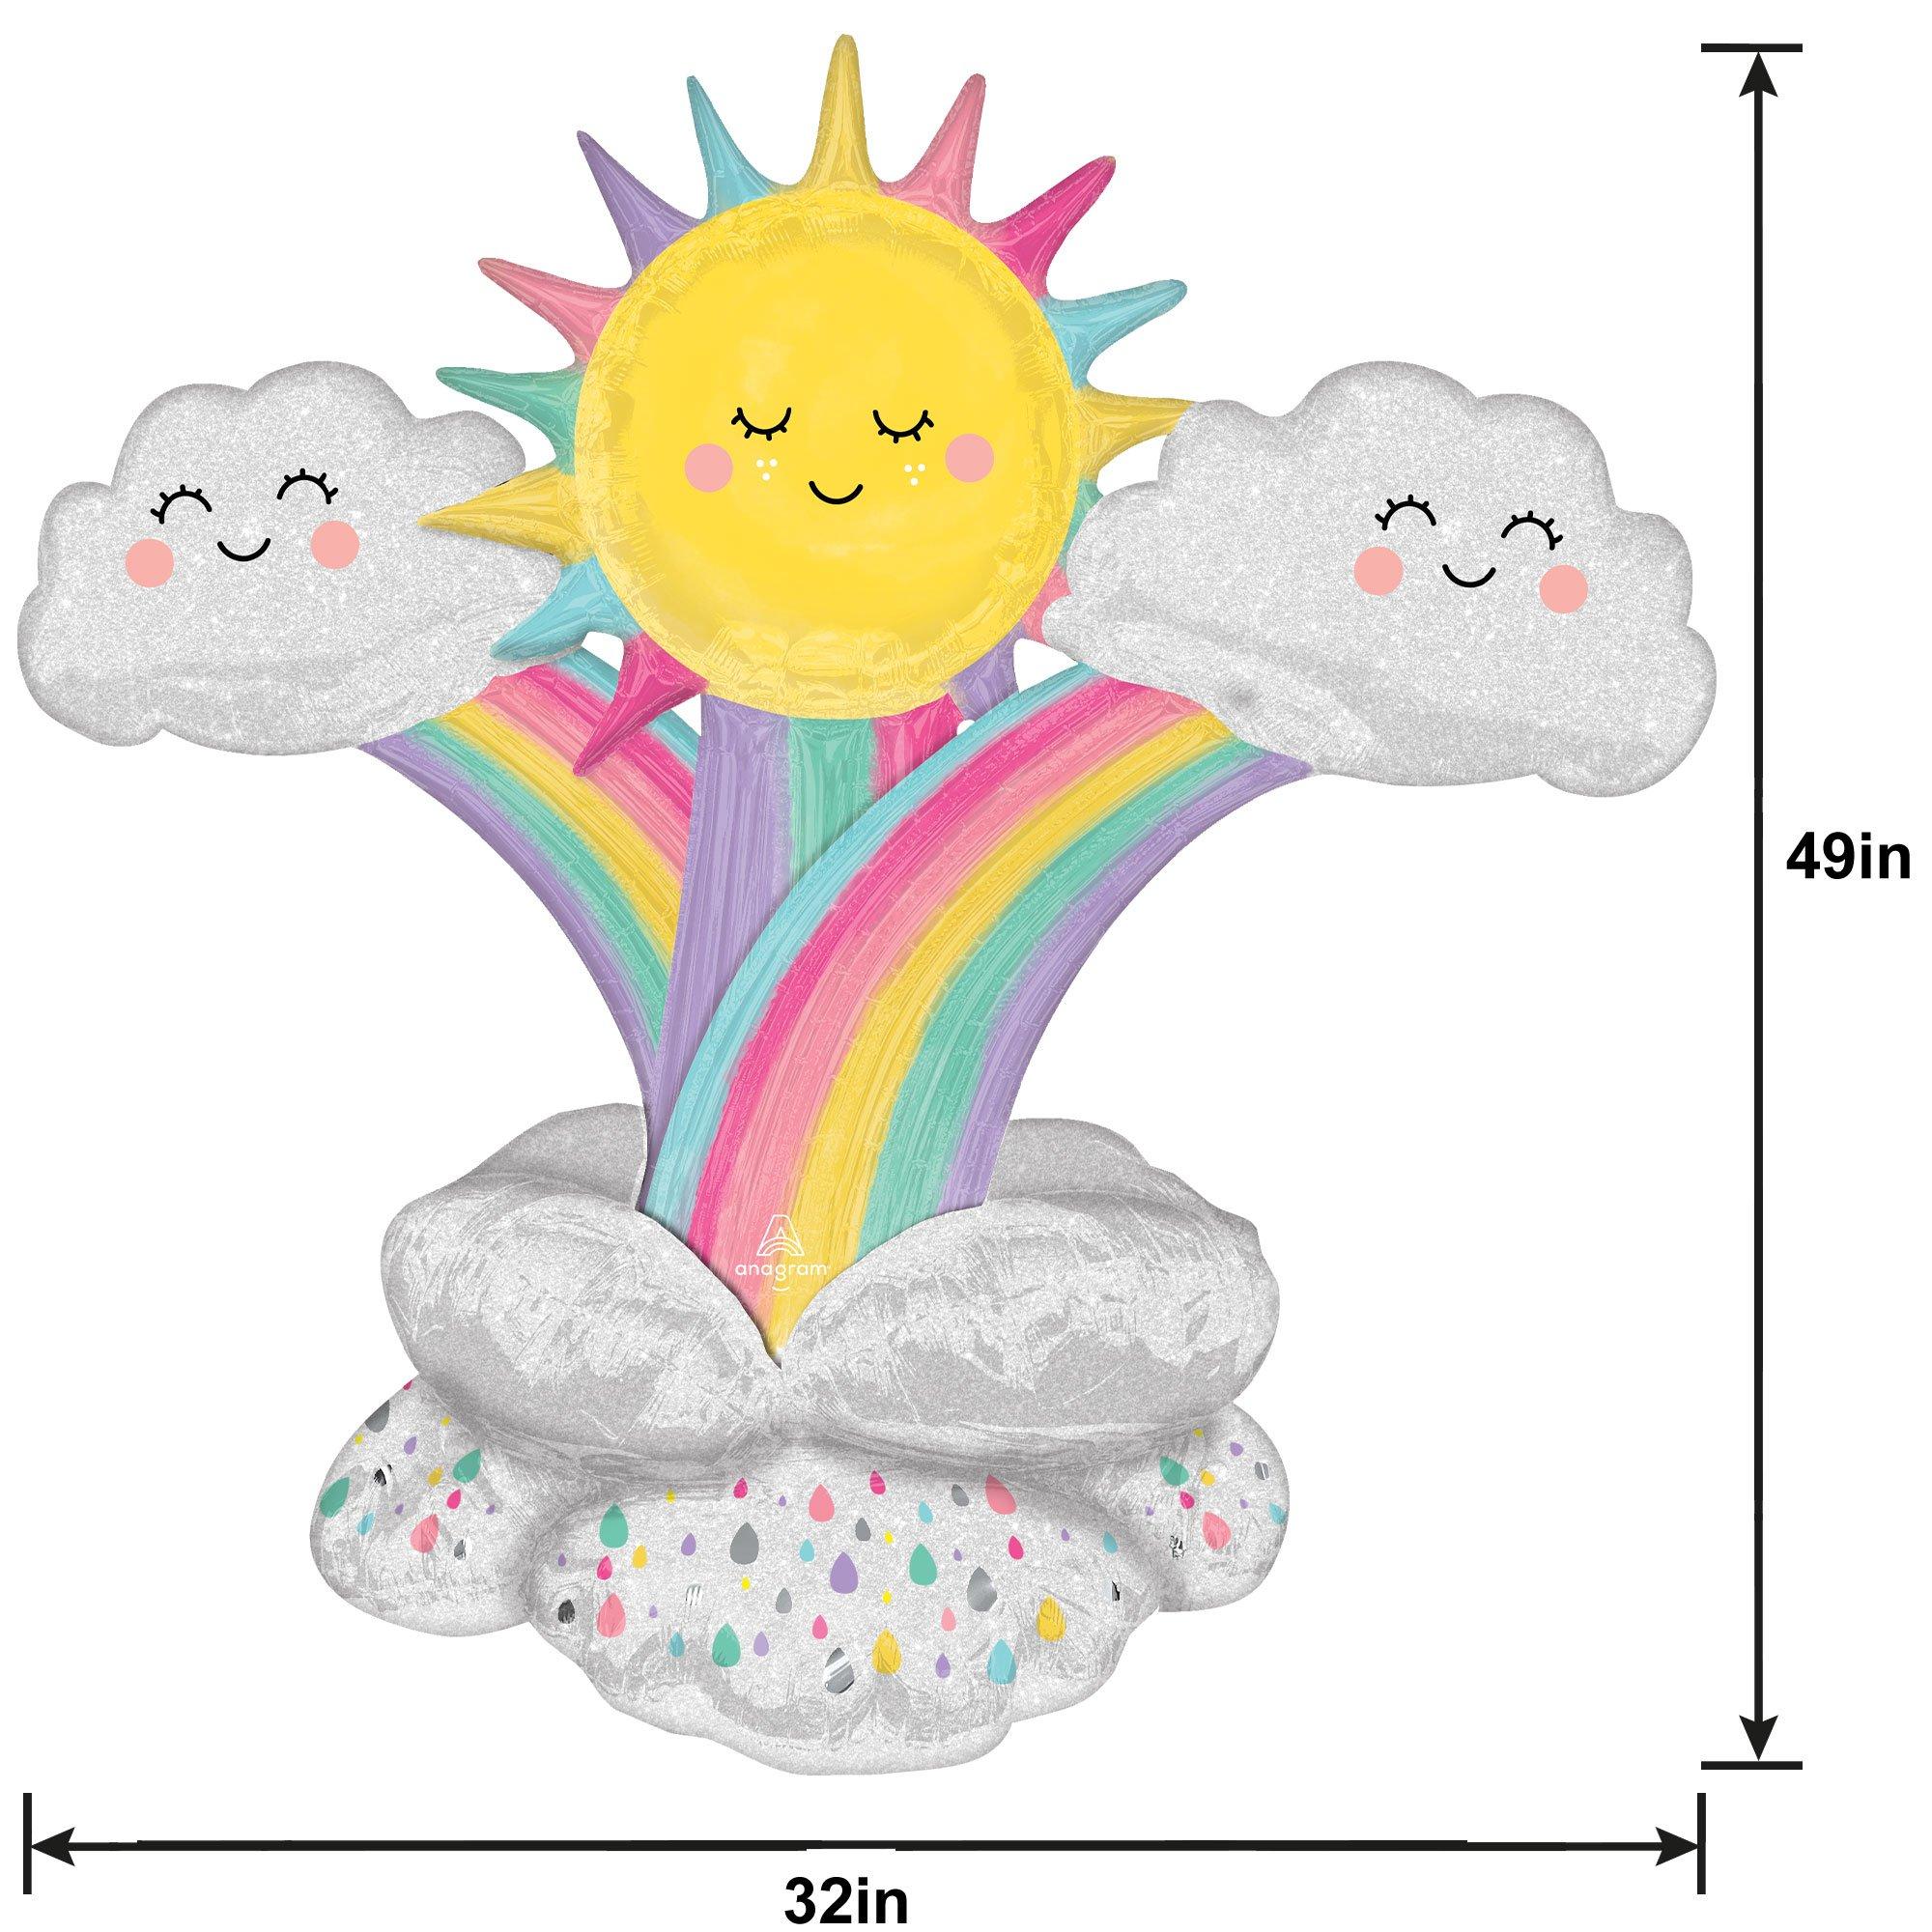 Stackerz™ Sun, Clouds & Rainbows Foil Balloon, 45in